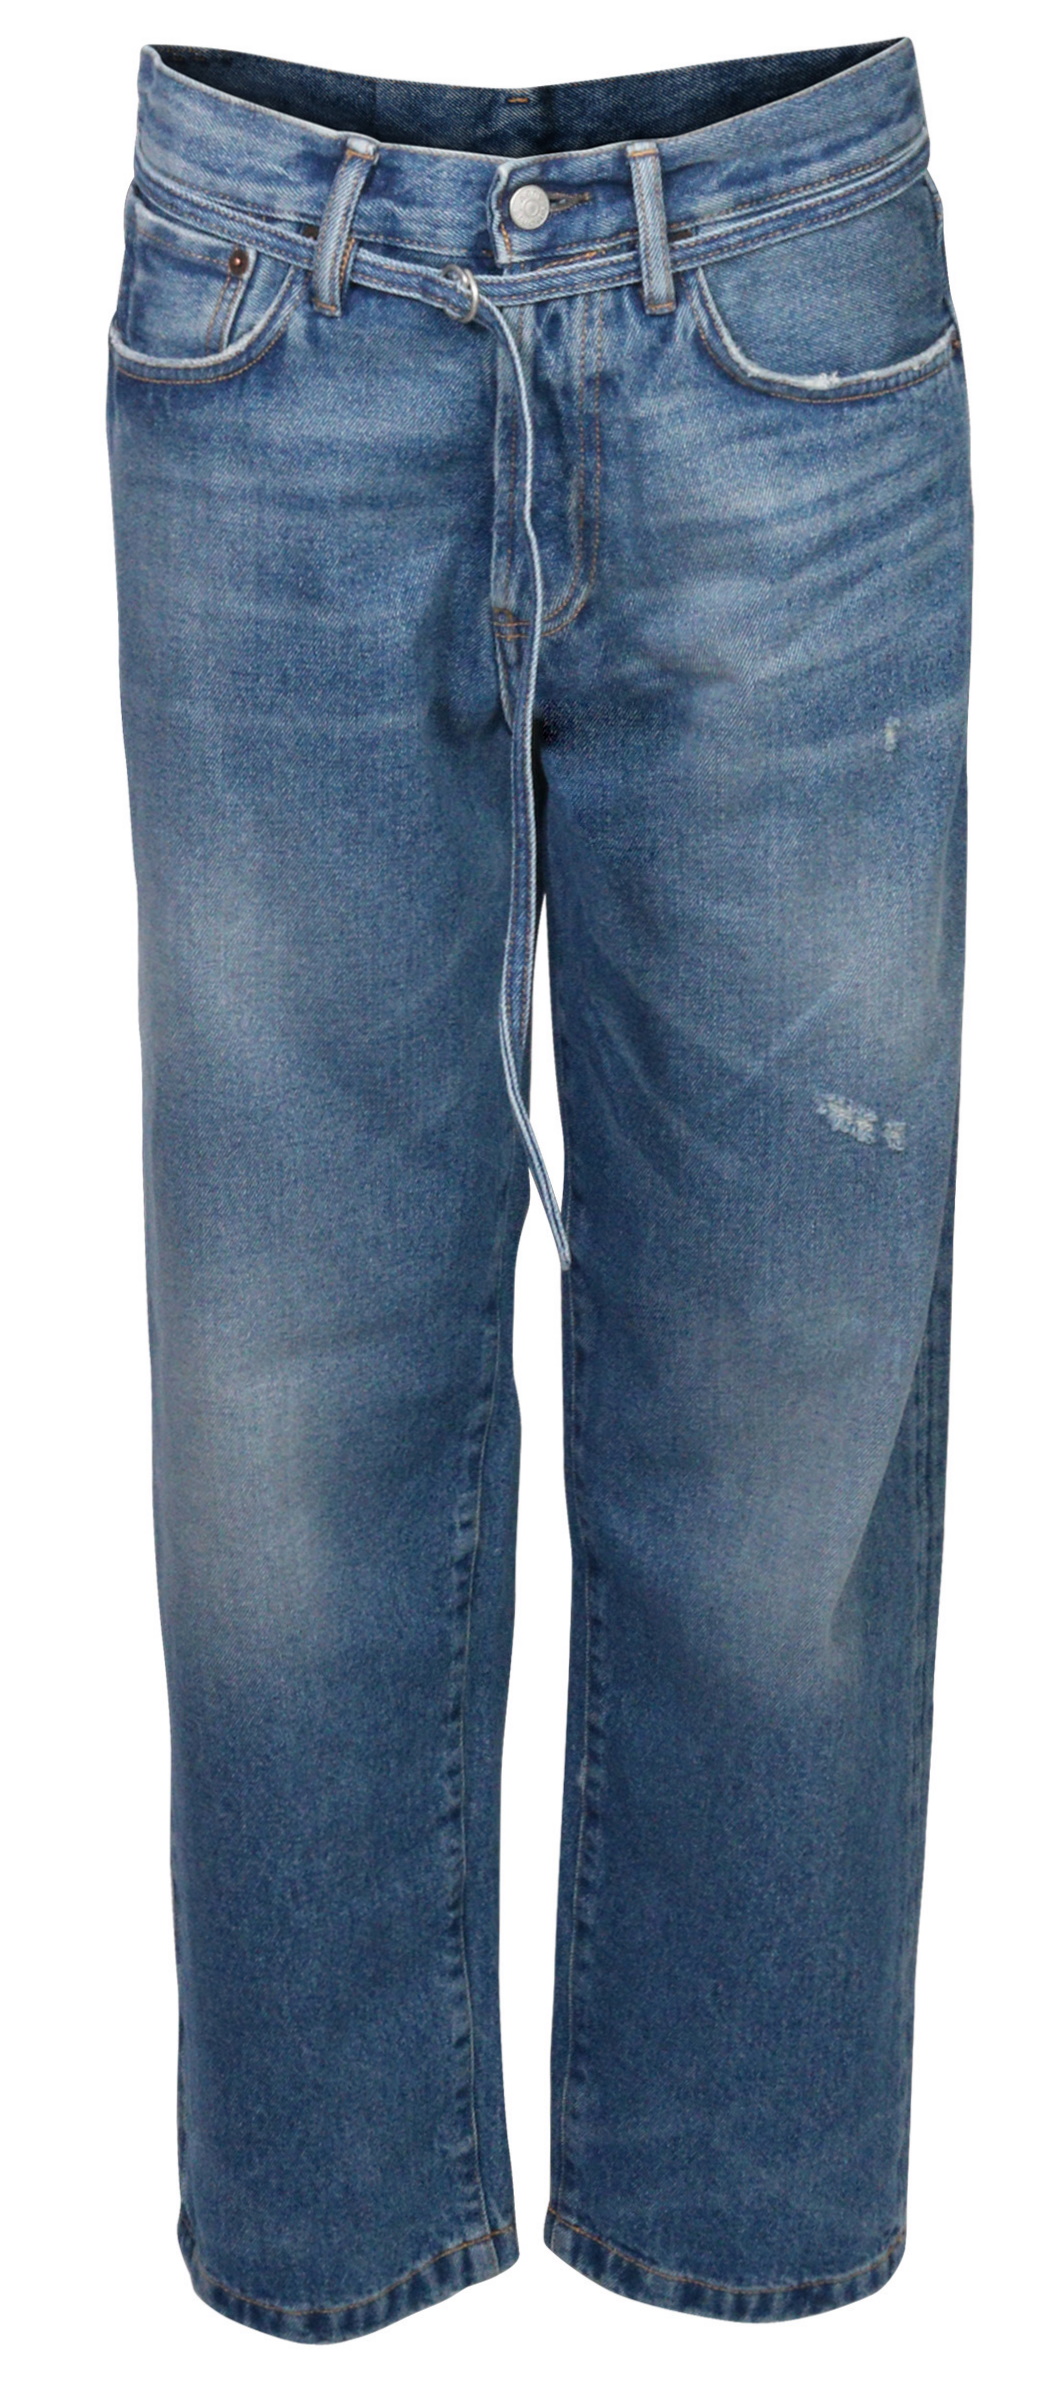 Acne Studios Jeans 1991 Toj Jeans Vintage Mid Blue